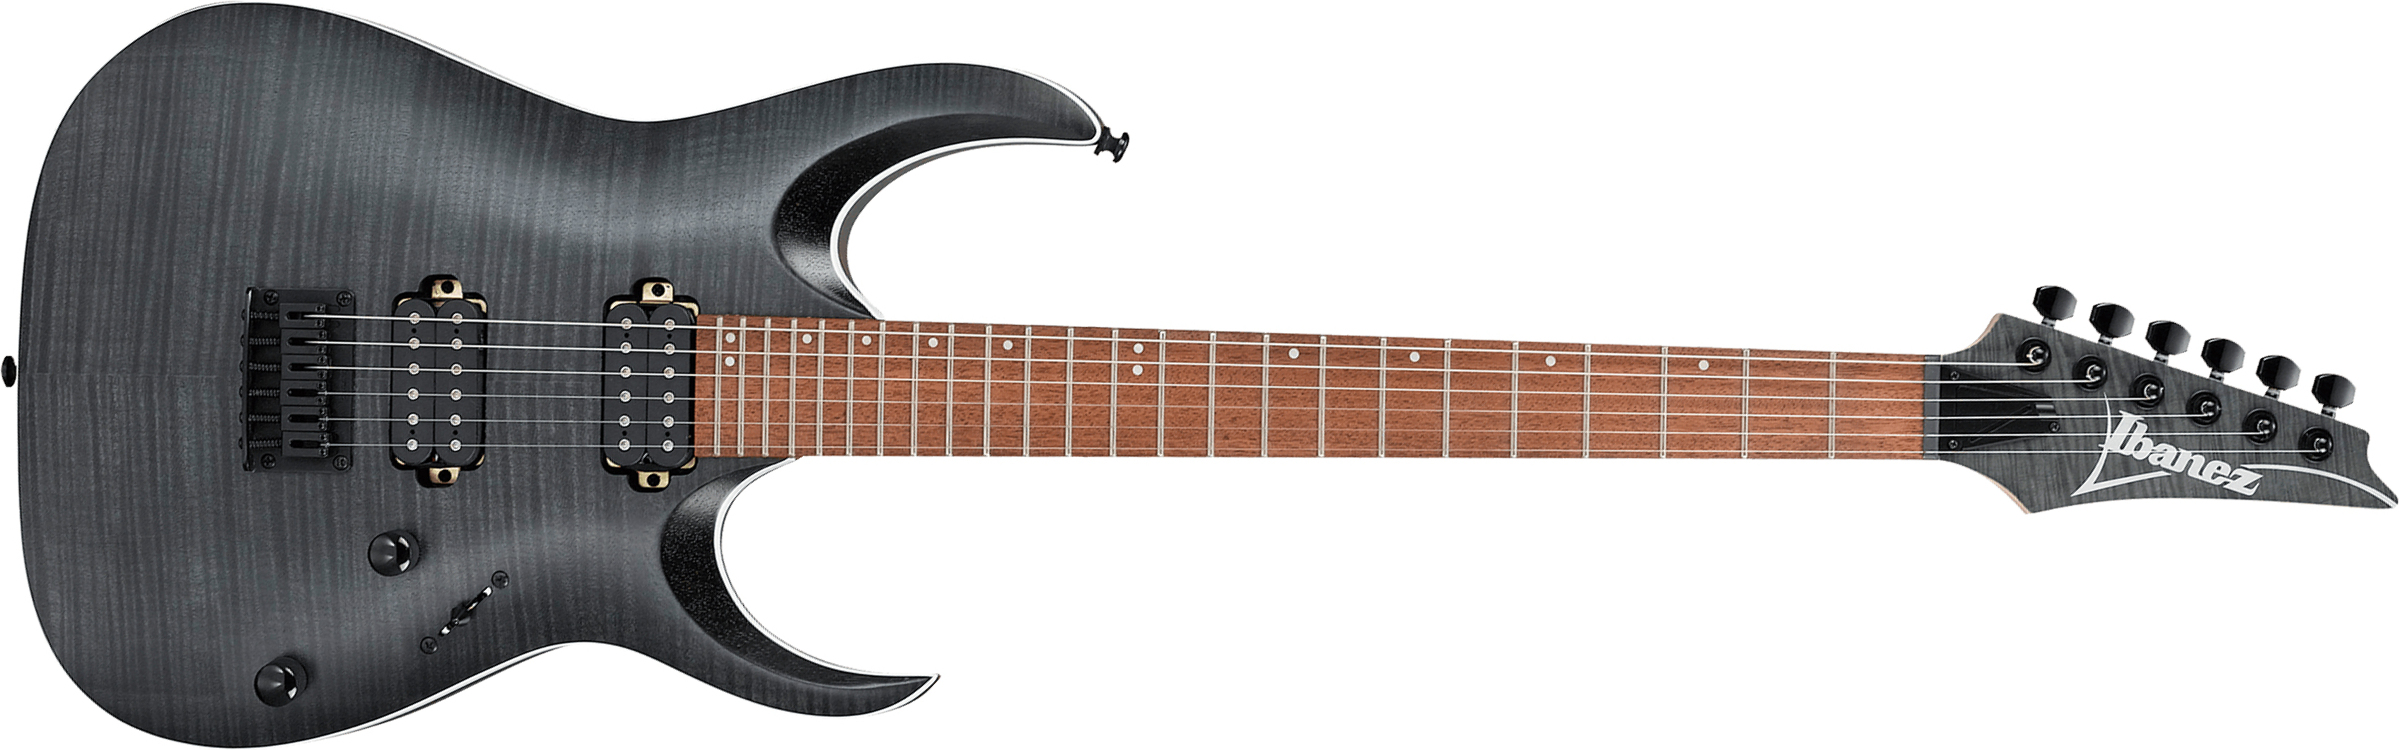 Ibanez Rga42fm Tgf Standard Hh Ht Rw - Transparent Grey Flat - Str shape electric guitar - Main picture